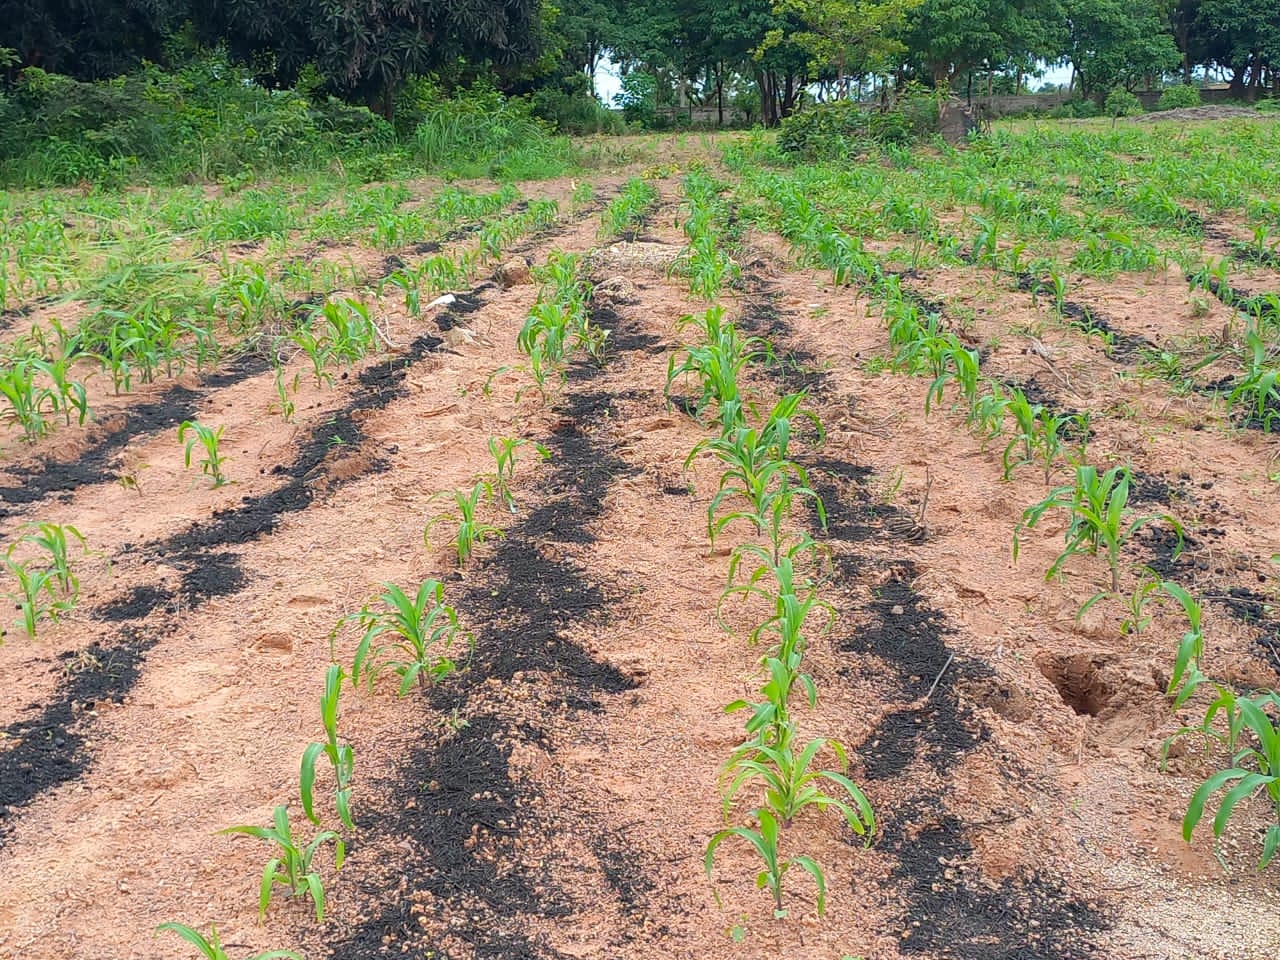 EXPERIMENTATION OF “BIOCHAR” FOR THE RESTORATION OF SOIL FERTILITY IN IVOIRE COTON AREA